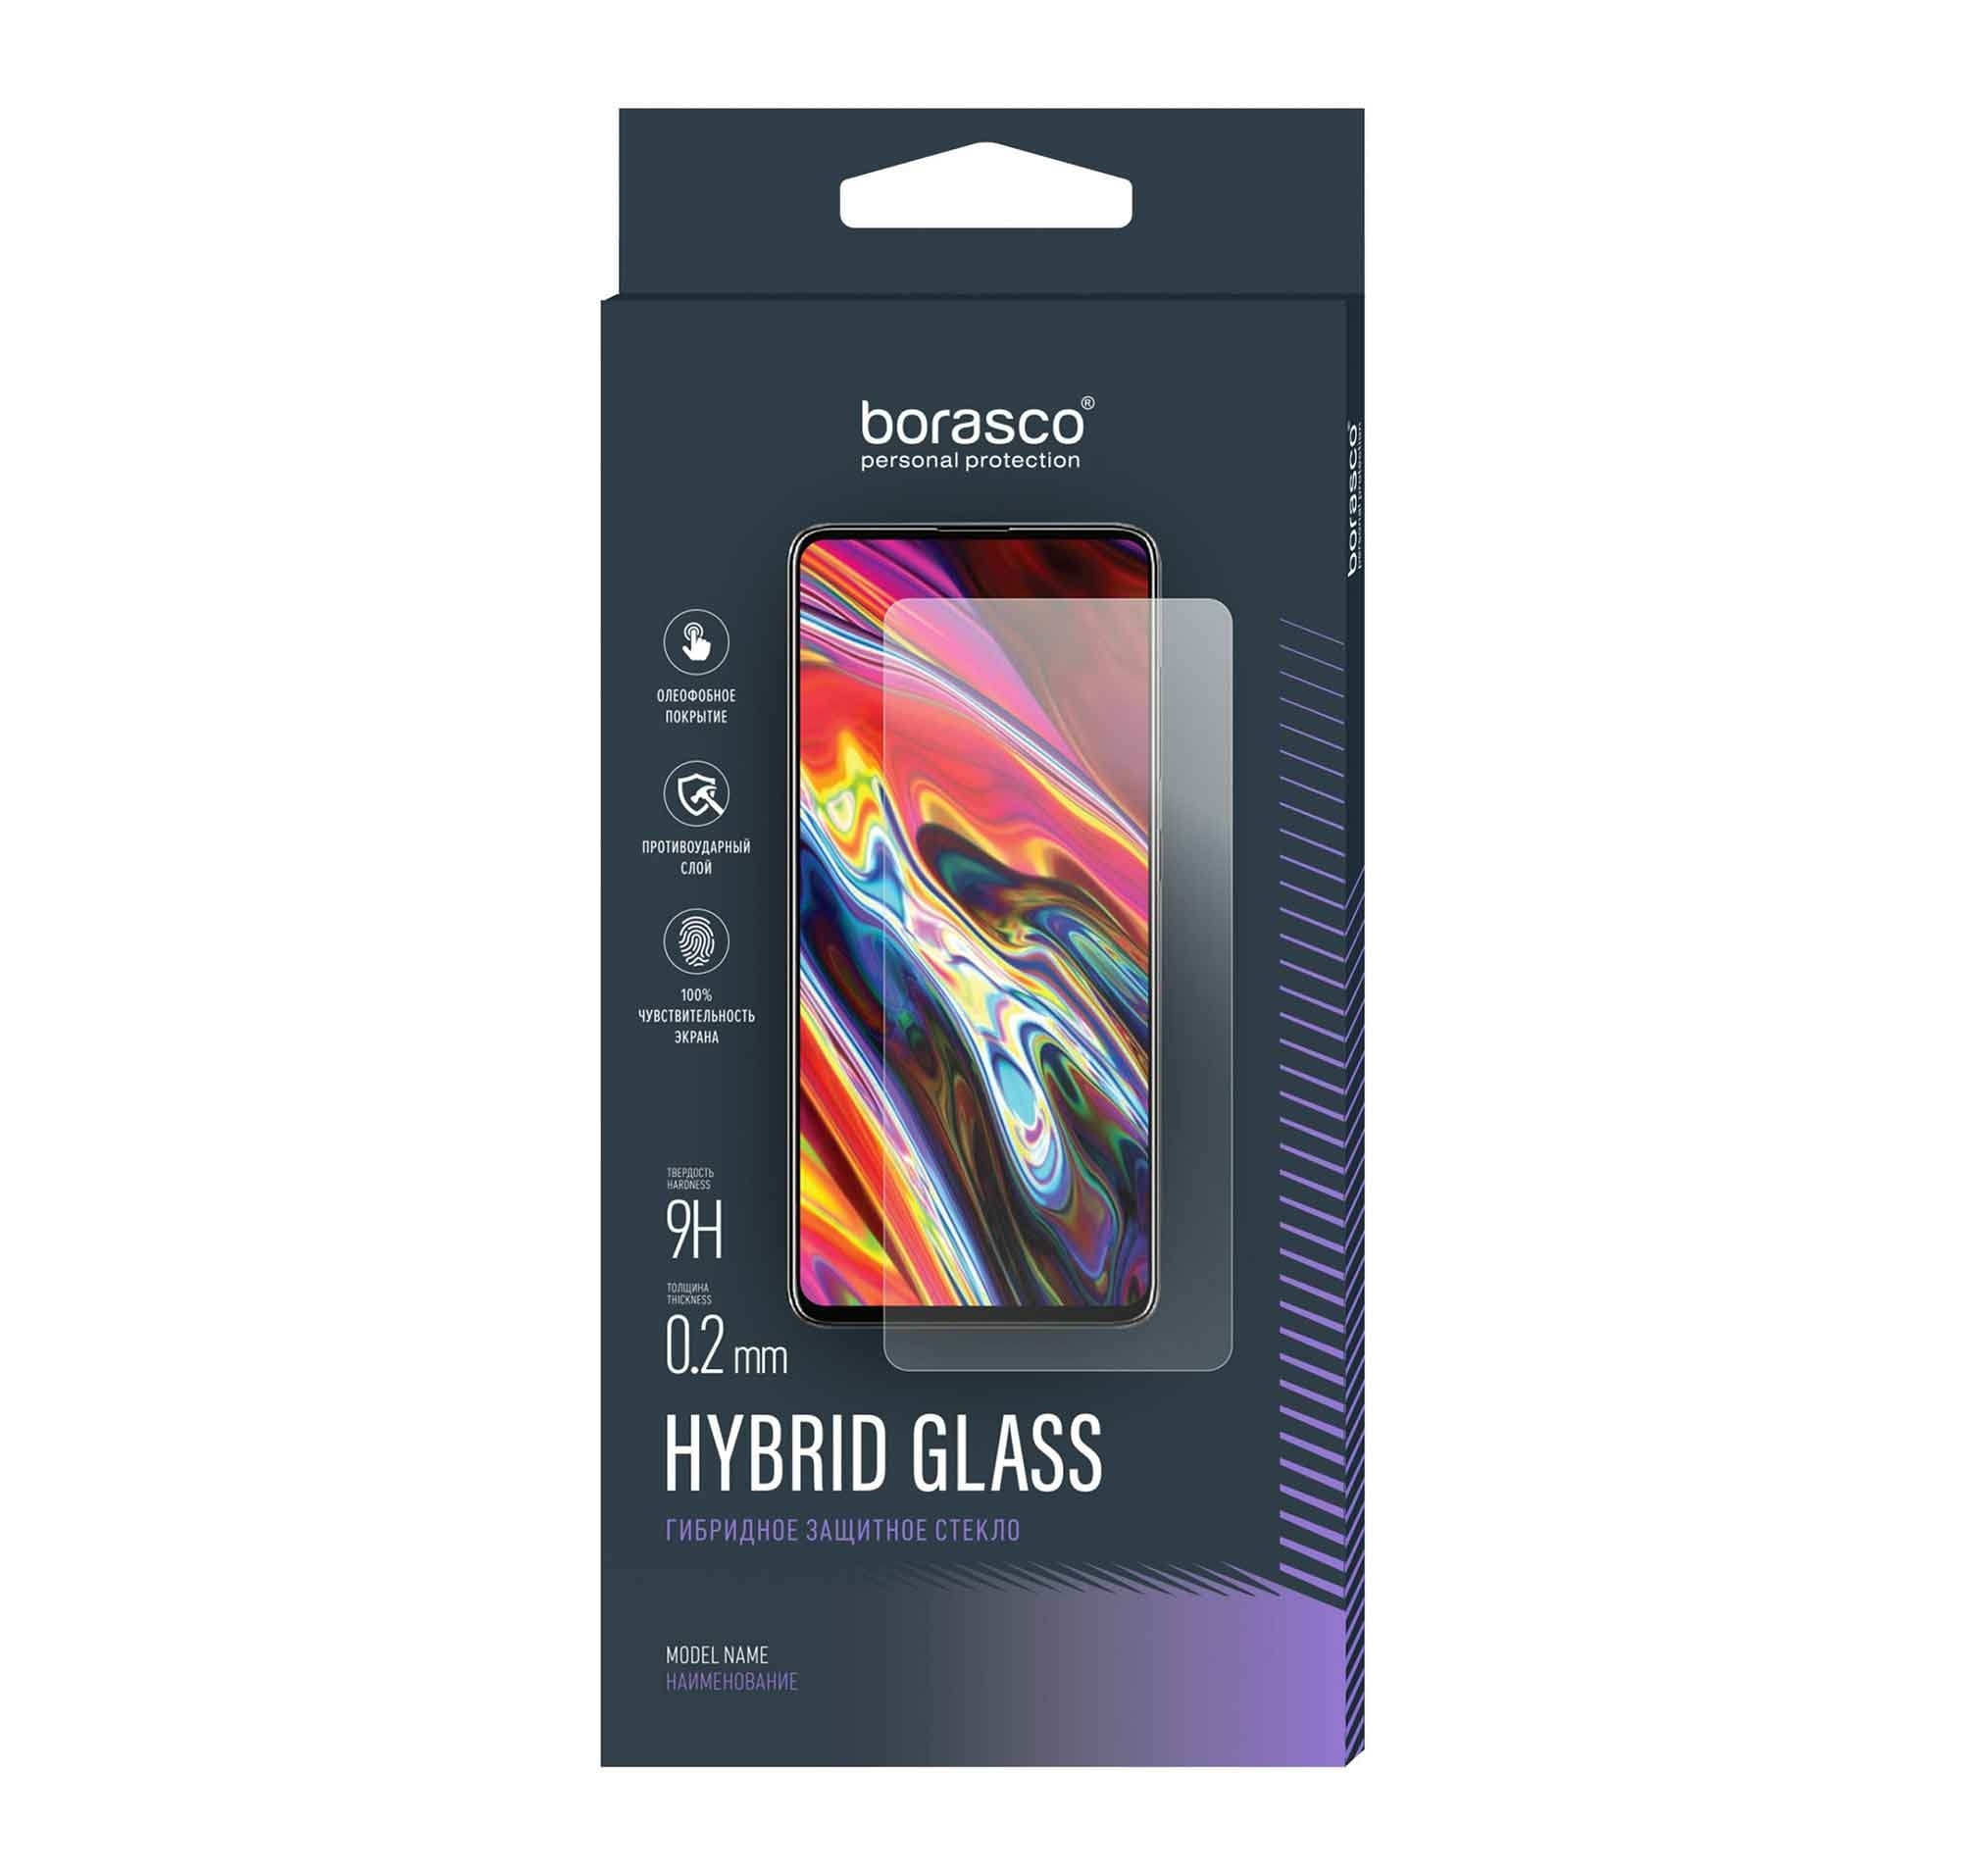 Стекло защитное BoraSCO Hybrid Glass для Oukitel F150 R2022 чехол mypads мраморный рисунок для oukitel f150 h2022 задняя панель накладка бампер